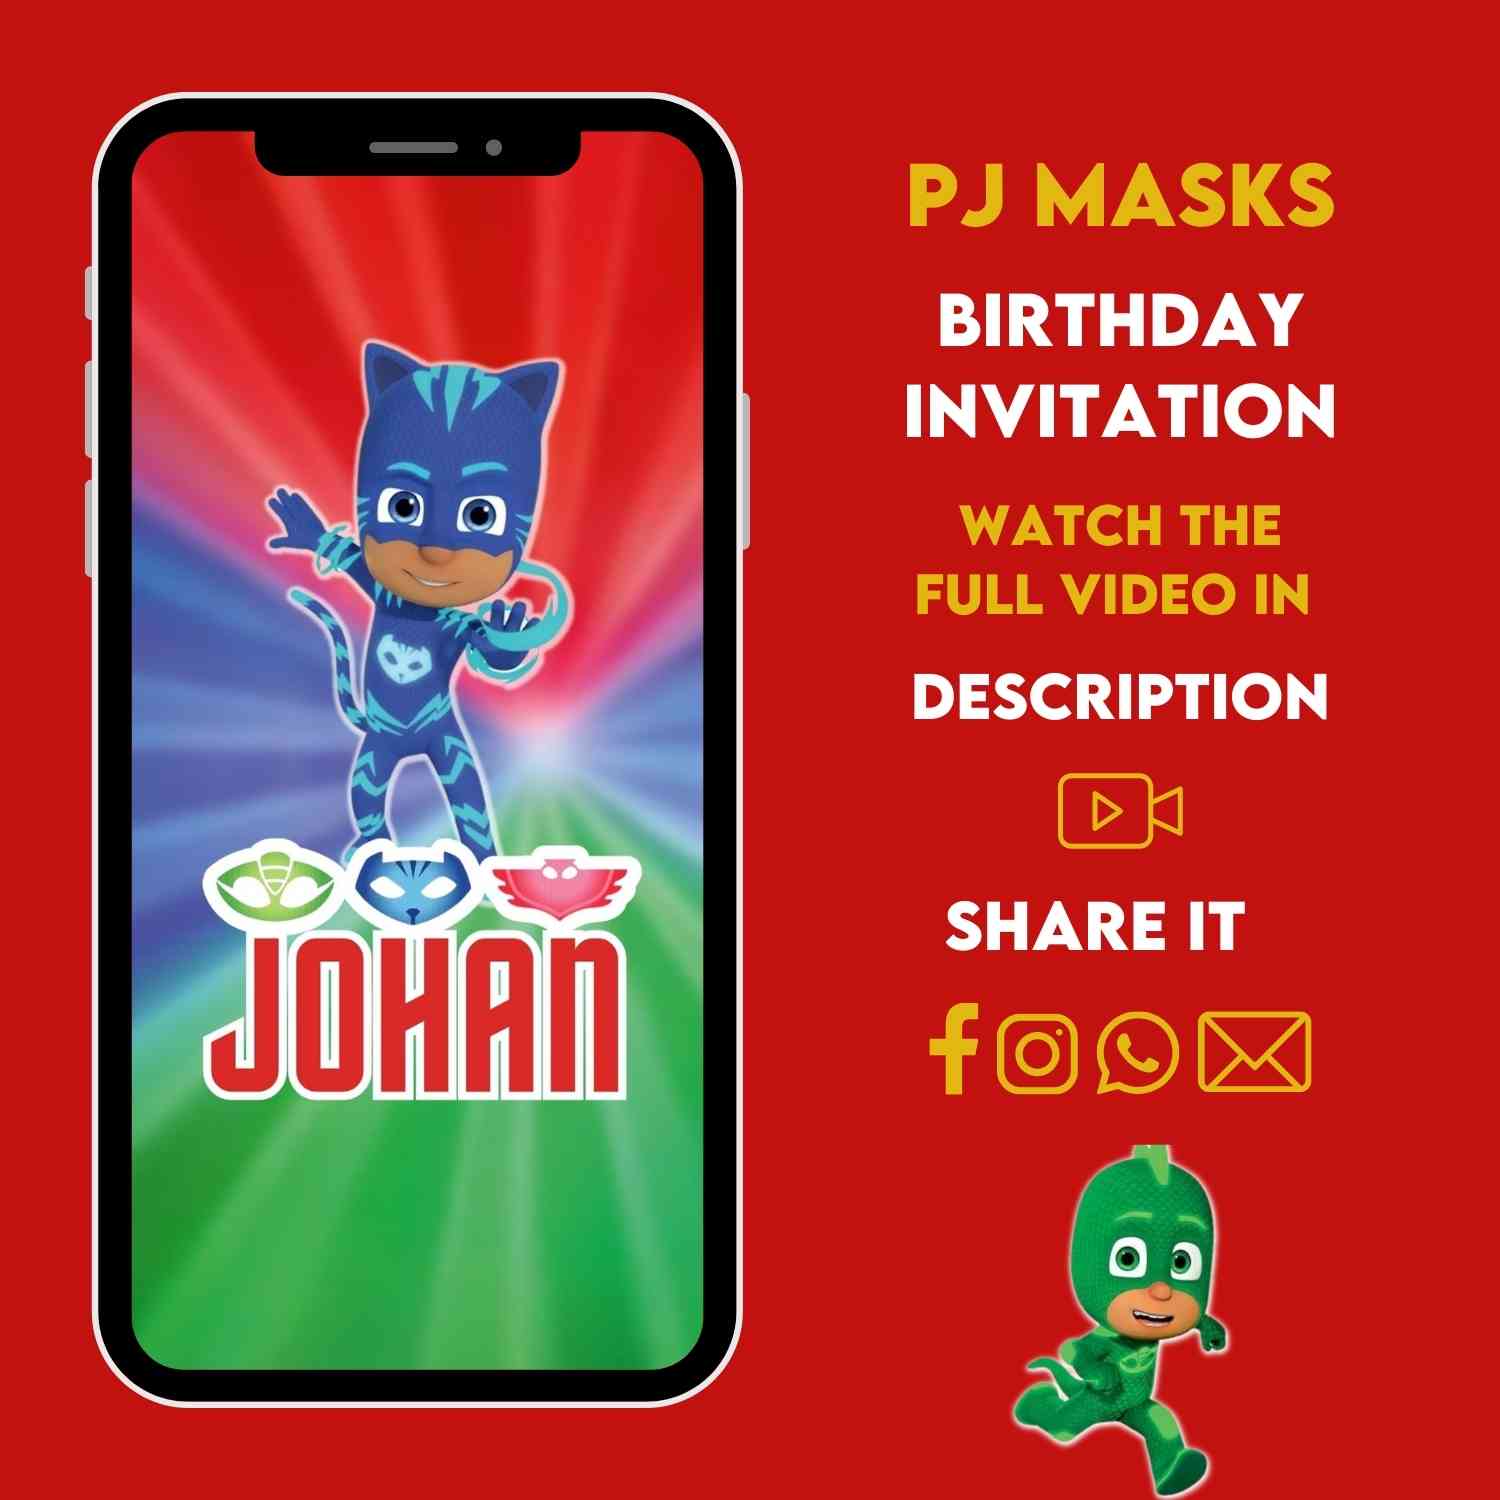 PJ Masks Birthday Party Video Invitation | PJ Masks Birthday Invites